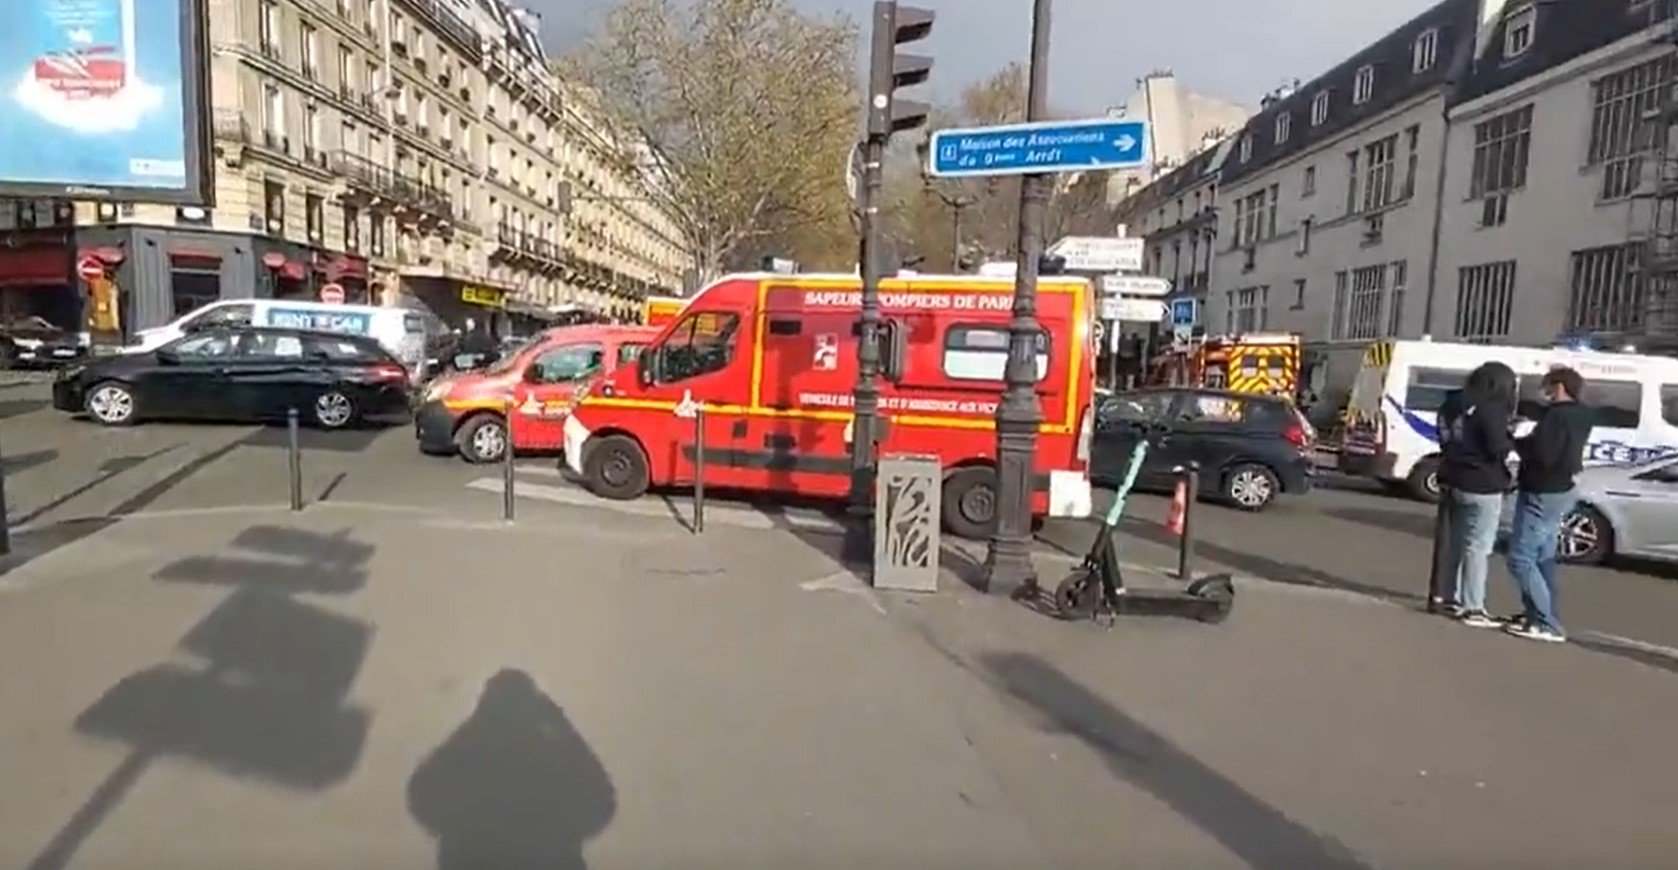  Un bărbat se autoincendiază la Paris, la staţia de metrou Pigalle